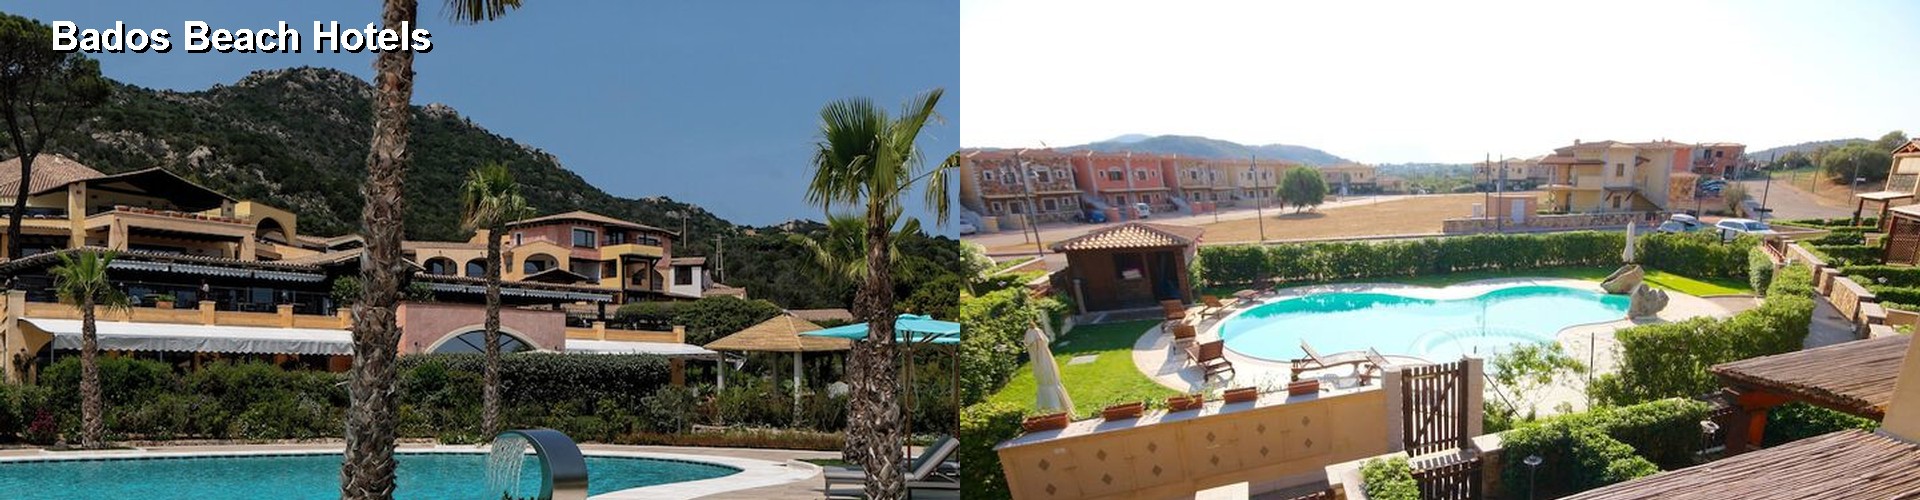 5 Best Hotels near Bados Beach